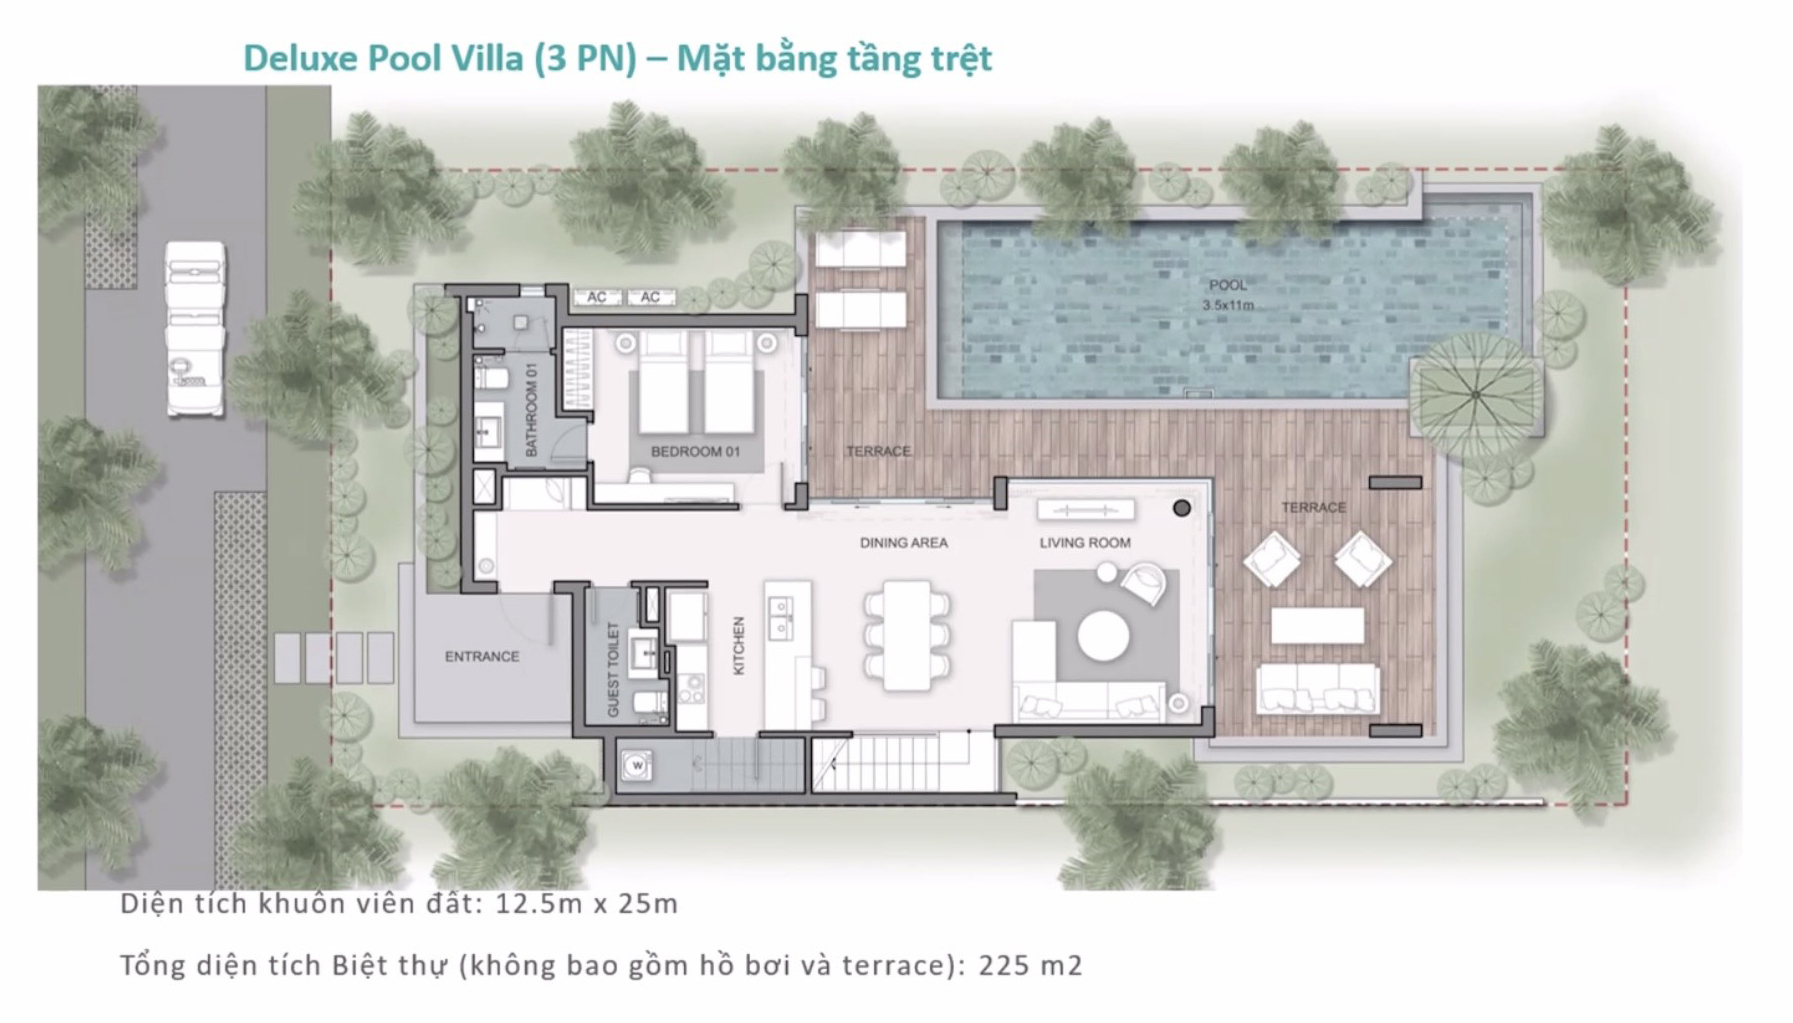 deluxe pool villa 3PN - mat bang tang tret